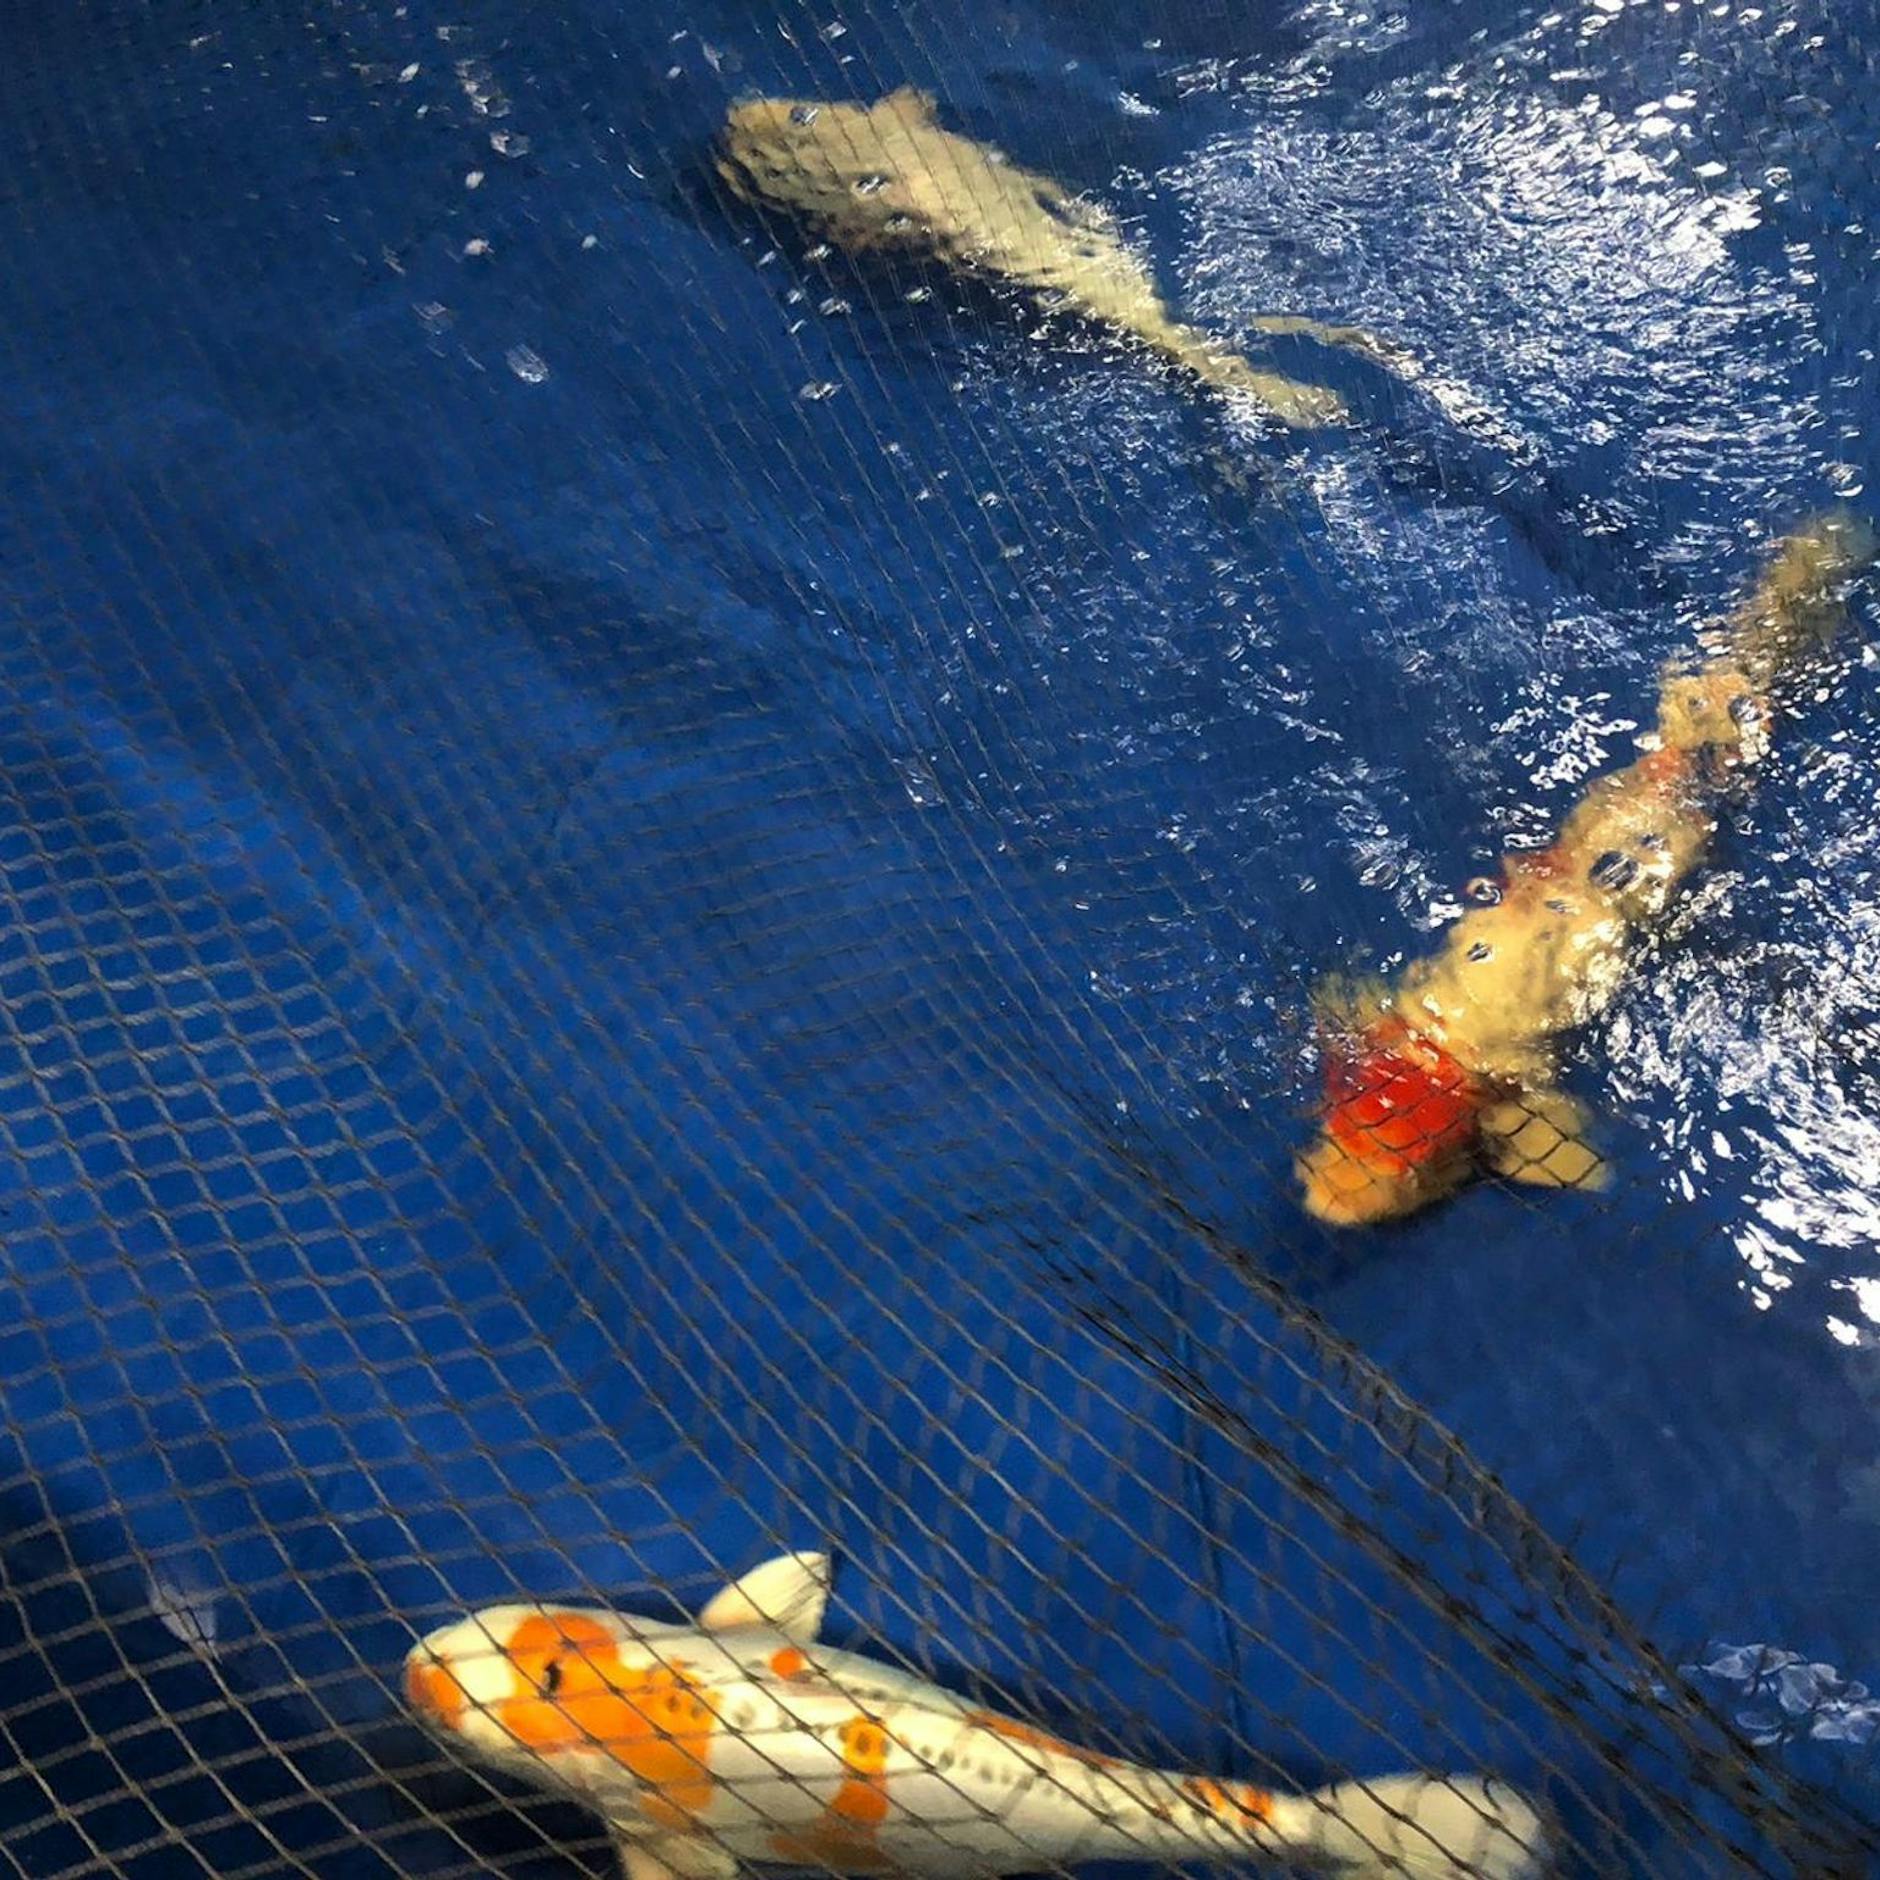 Image - Geplatztes Aquarium: Viele Fische werden in Zoo behandelt